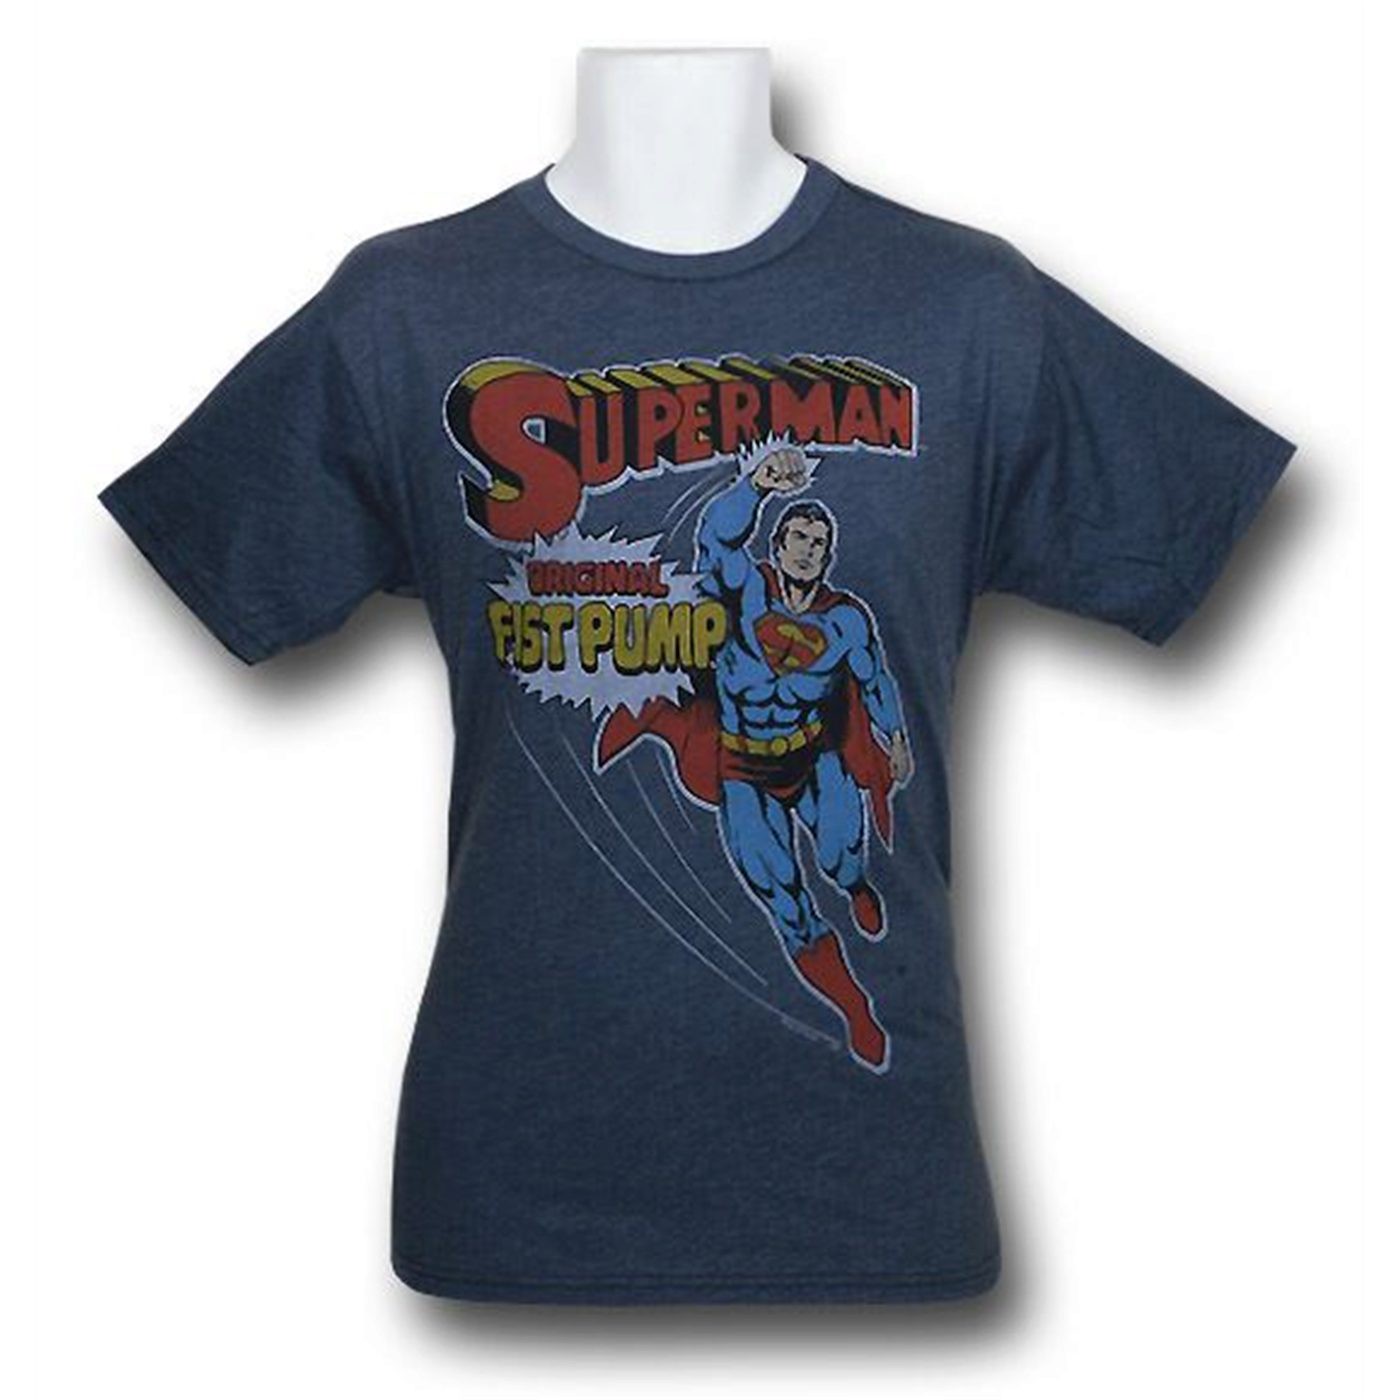 Superman Fist Pump Junk Food T-Shirt